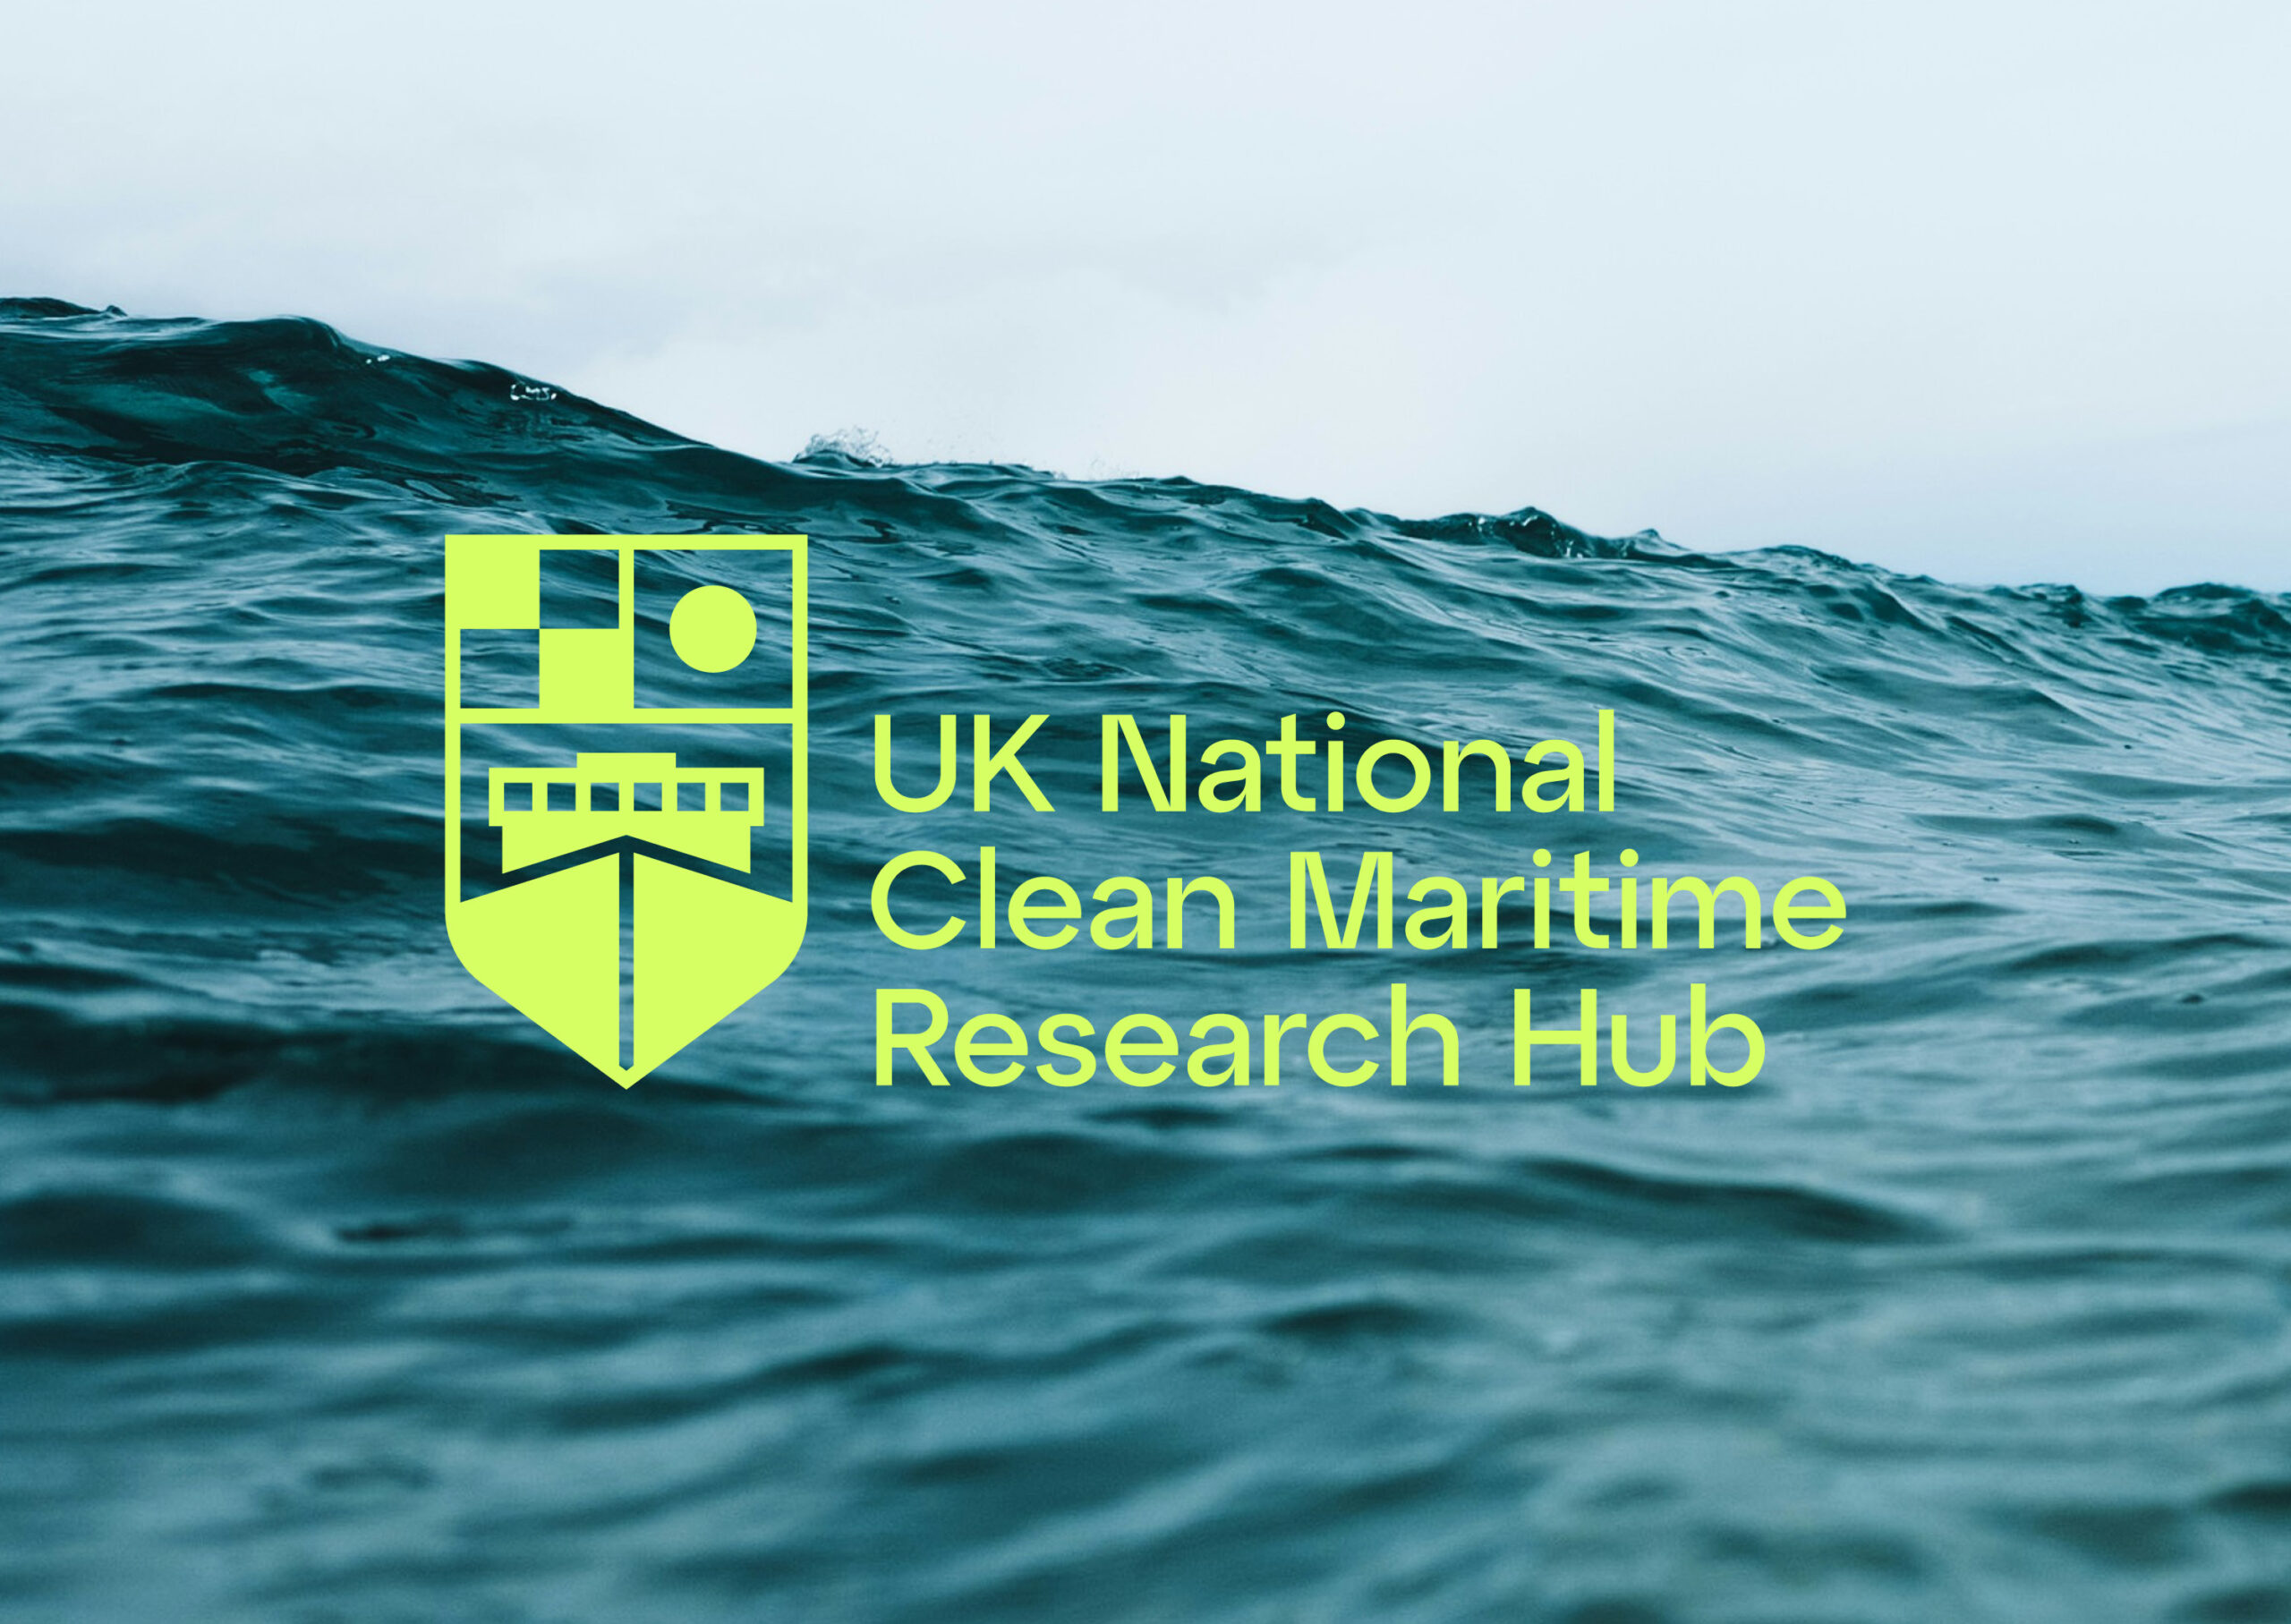 UK National Clean Maritime Research Hub Image